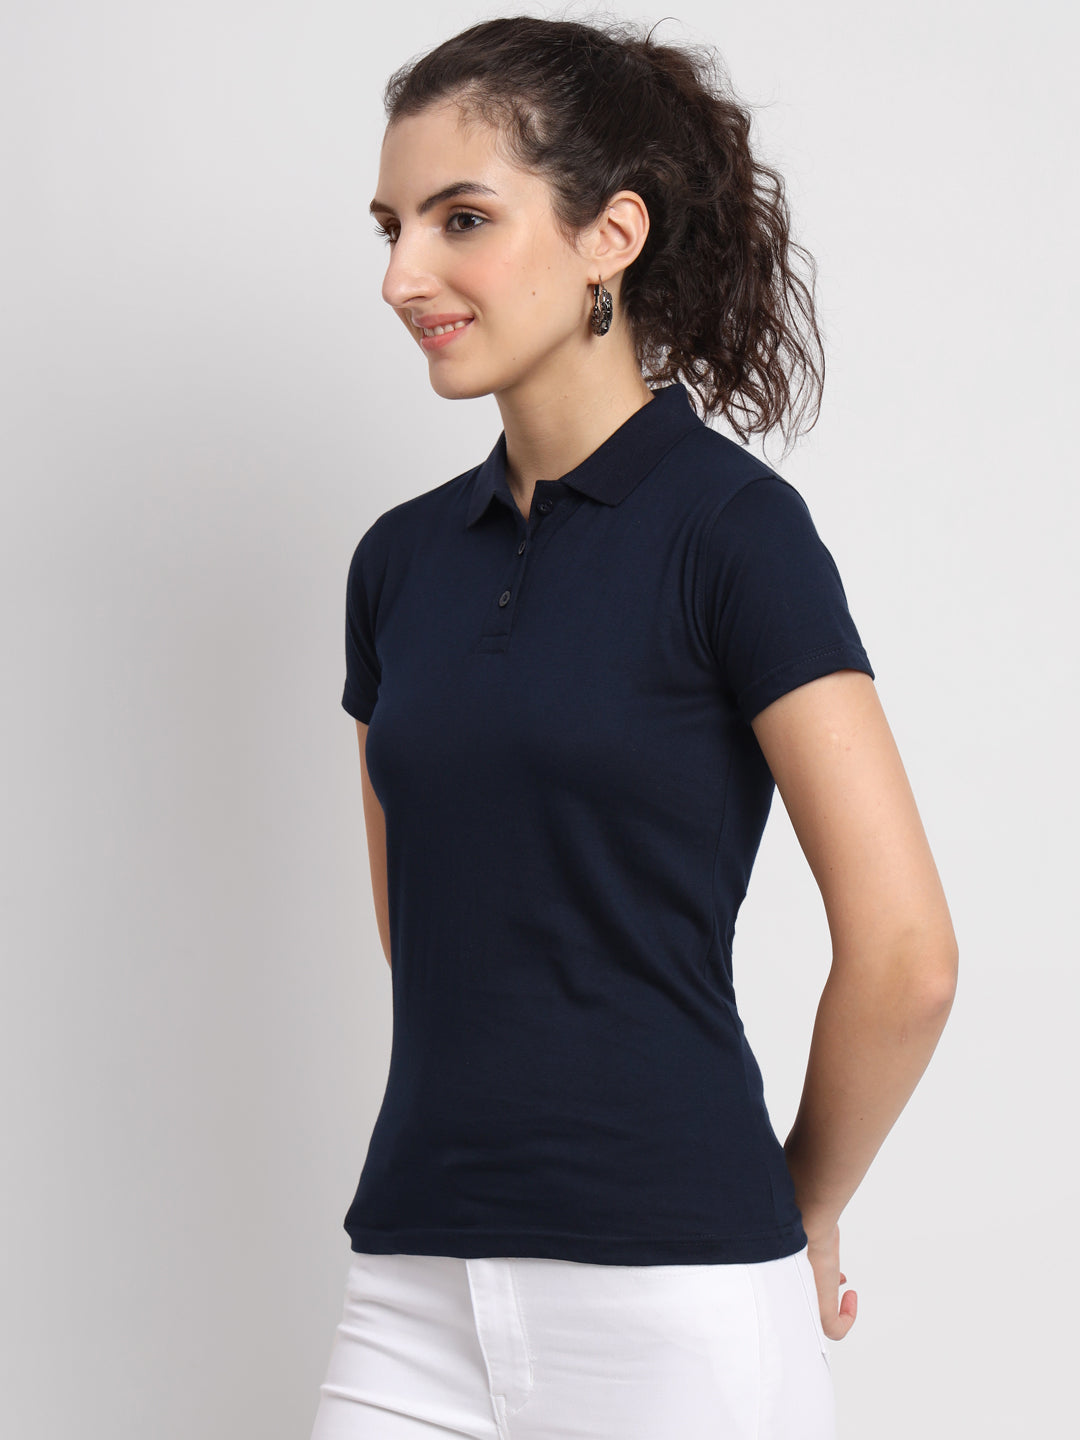 Ap'pulse Women's Casual Polo Tshirt